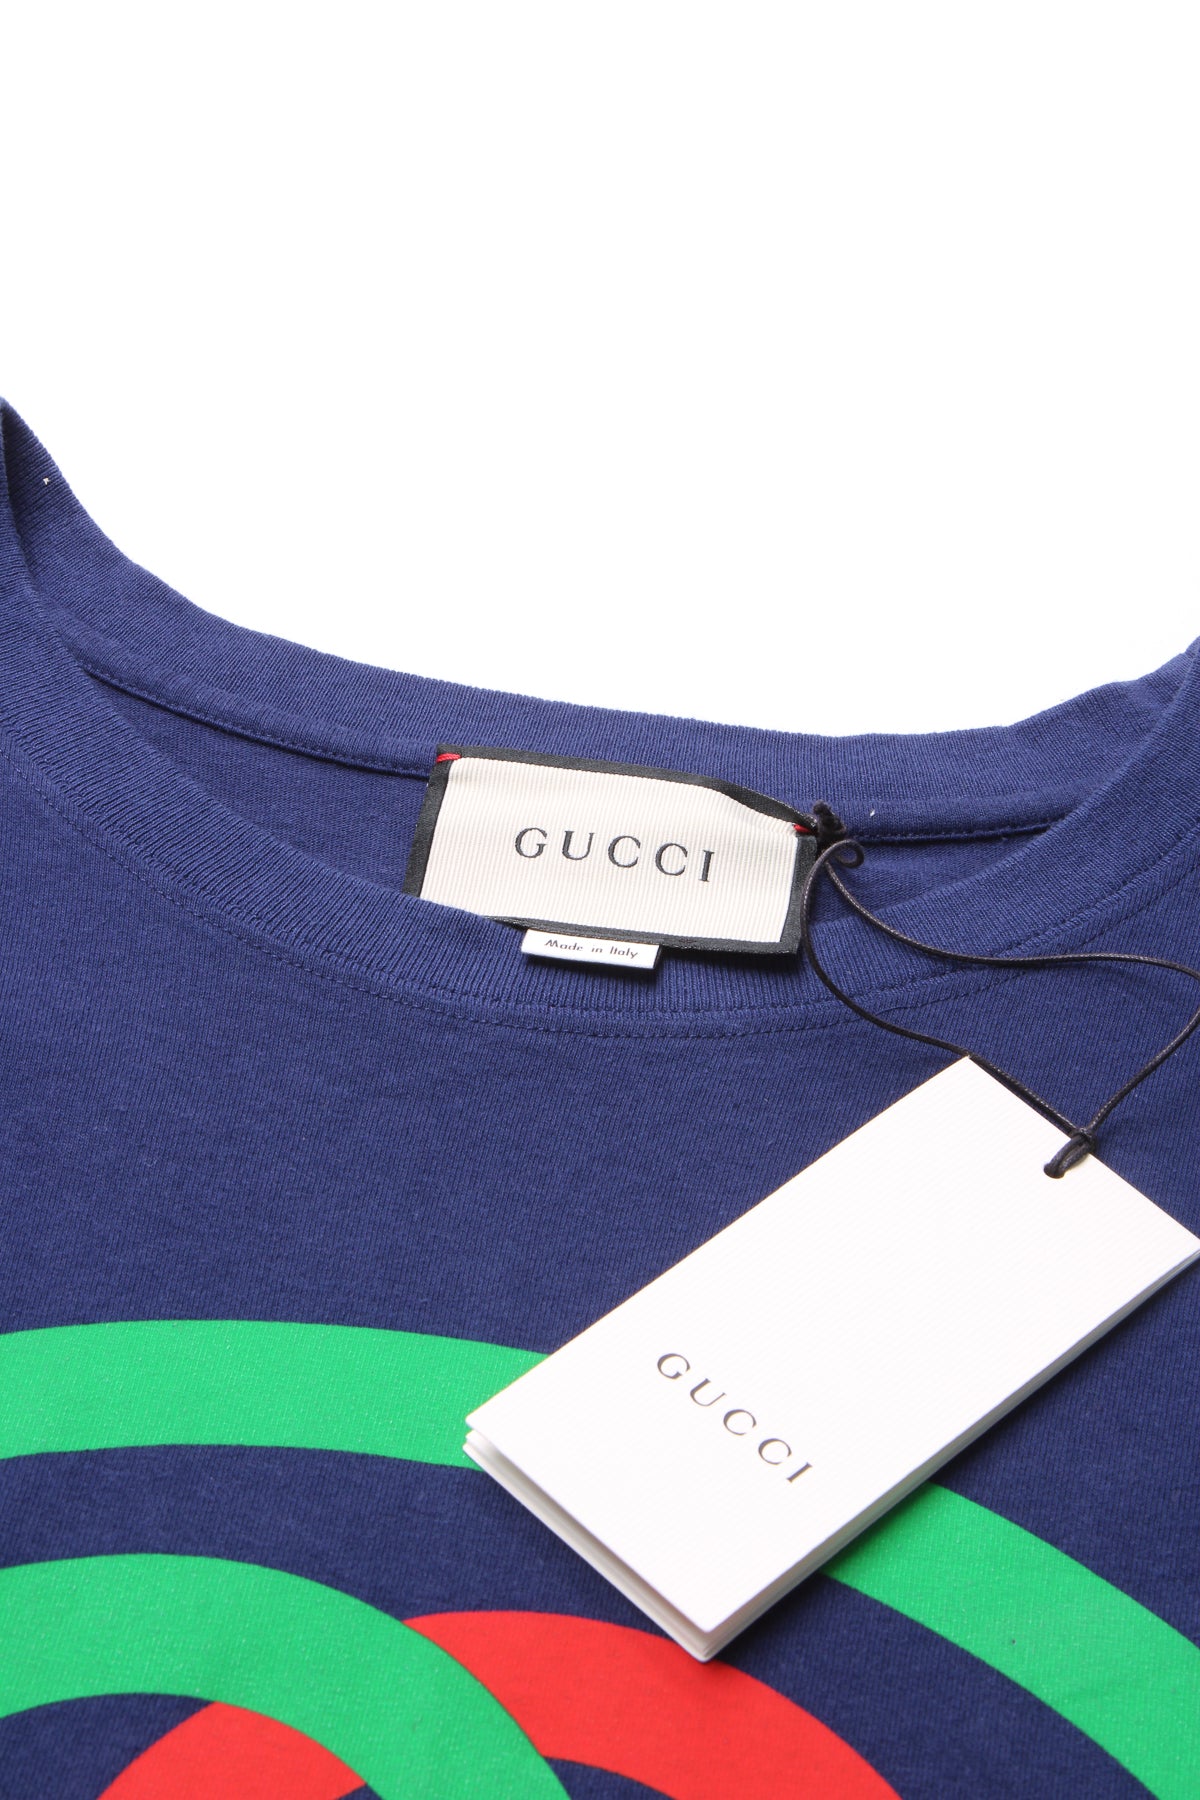 Gucci Interlocking G T-Shirt